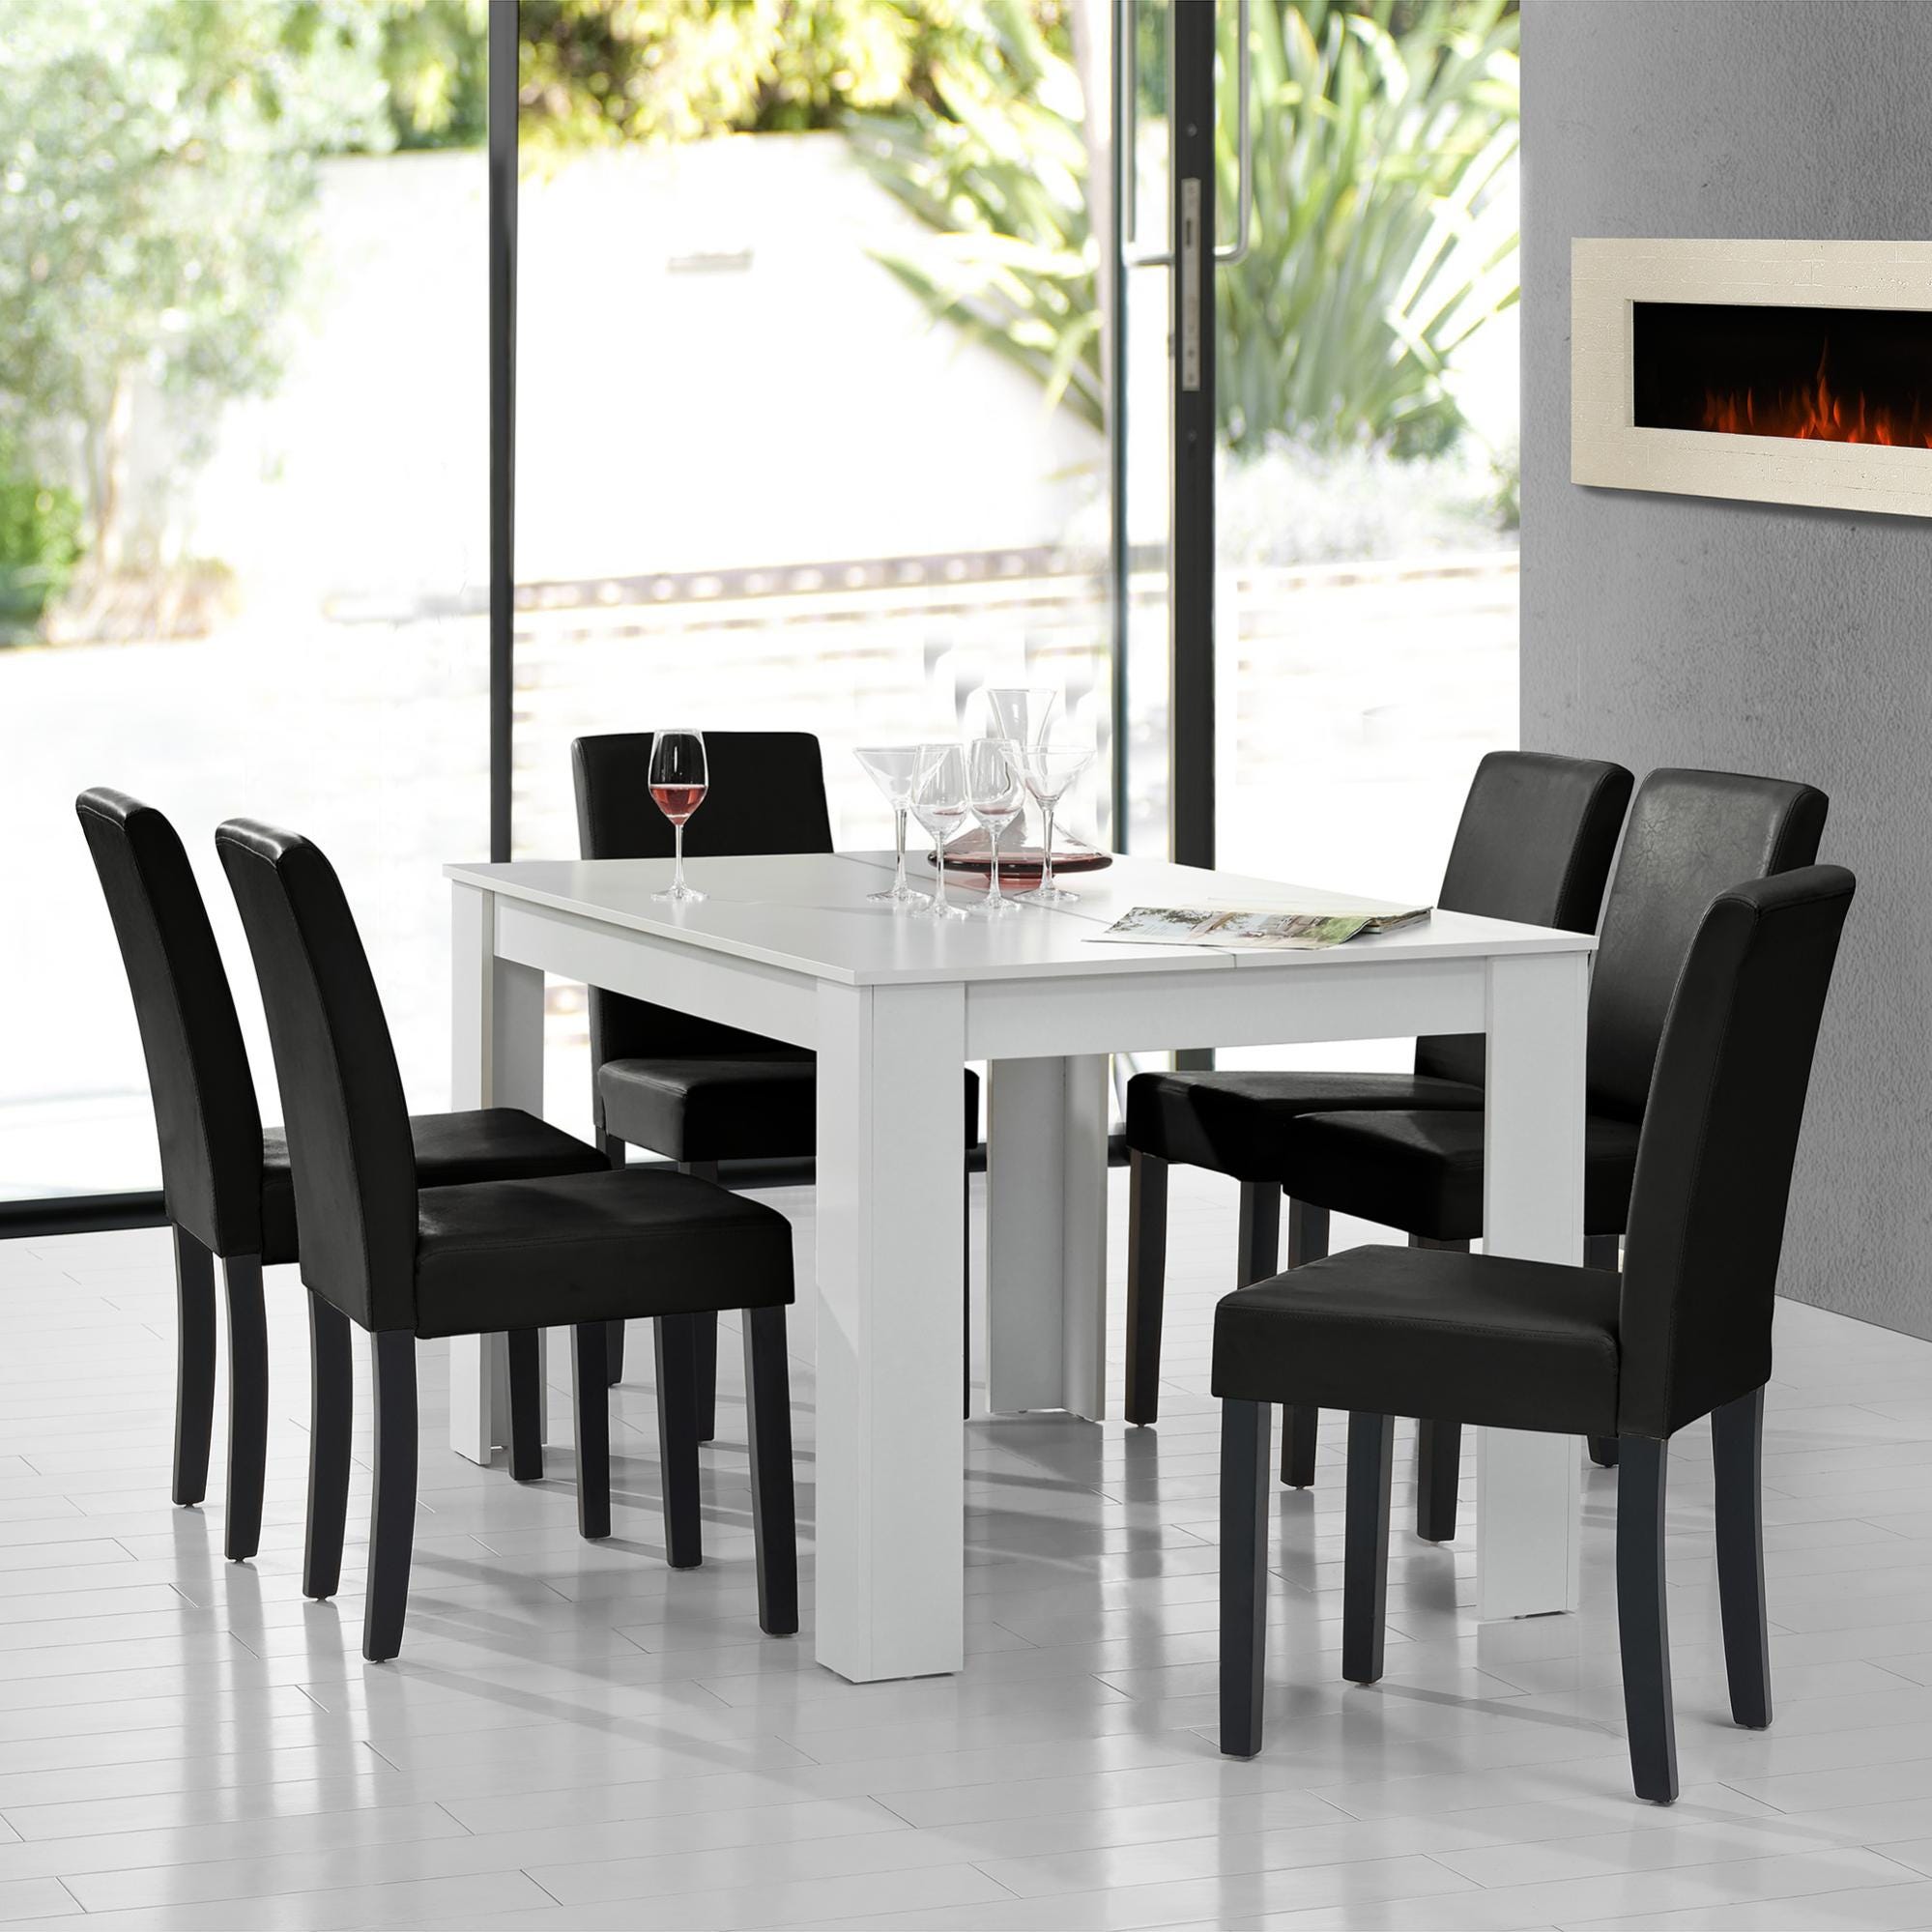 en.casa] Tavolo da pranzo bianco opaco con 6 sedie nere imbottite  similpelle 14x9 sala da pranzo set